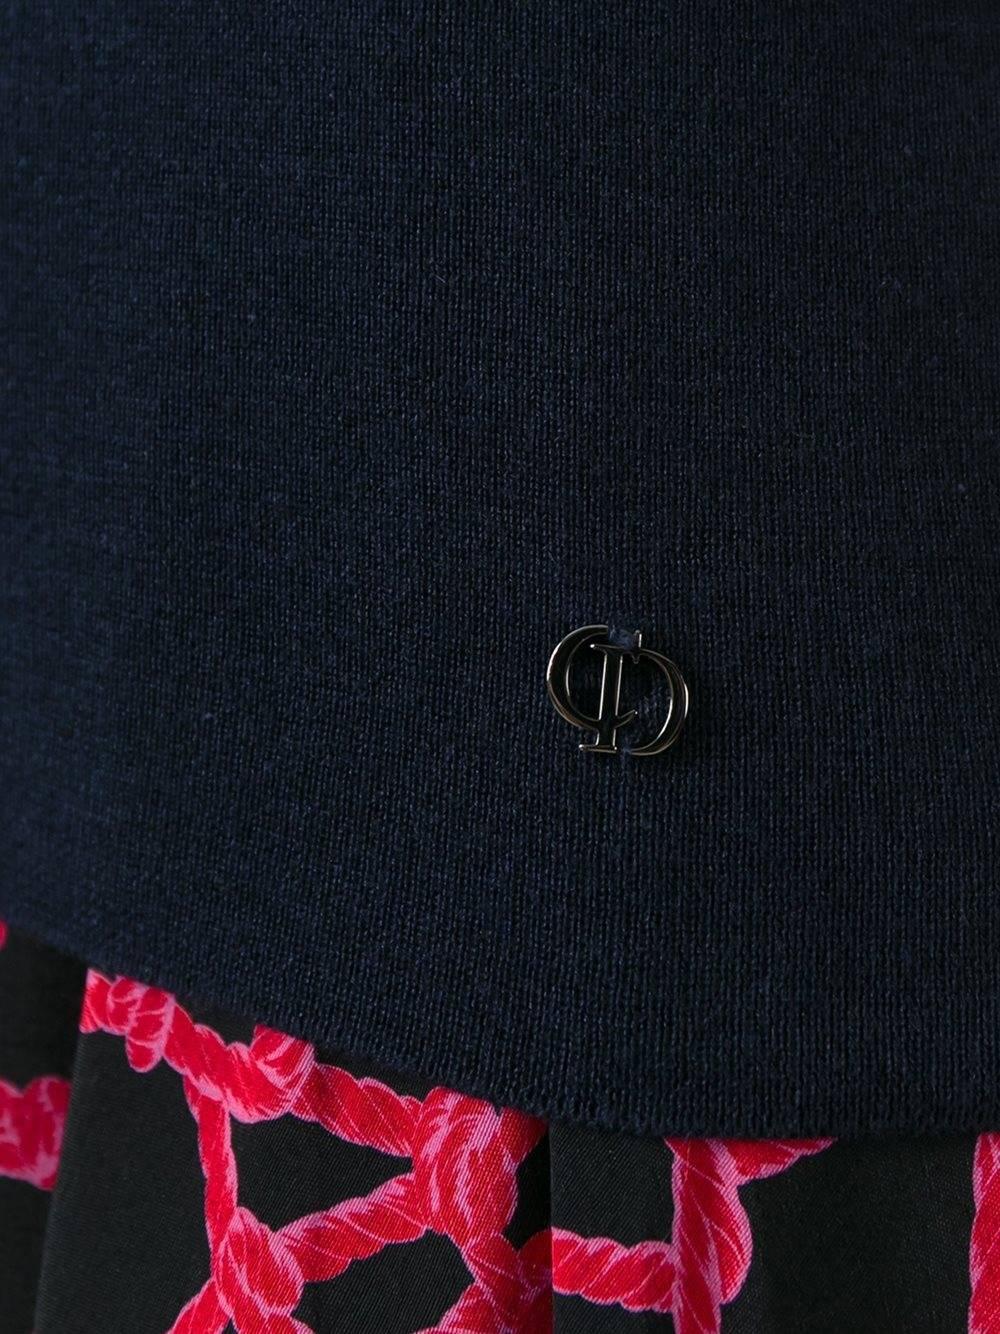 Christian Dior blue and red cashmere-silk blend funnel neck jumper. 

Colours: Blue / Red

Measurements: waist: 64 centimetres, bust: 74 centimetres, shoulder: 36 centimetres, sleeve length: 67 centimetres

Size: FR 40

Material: Silk 30% /